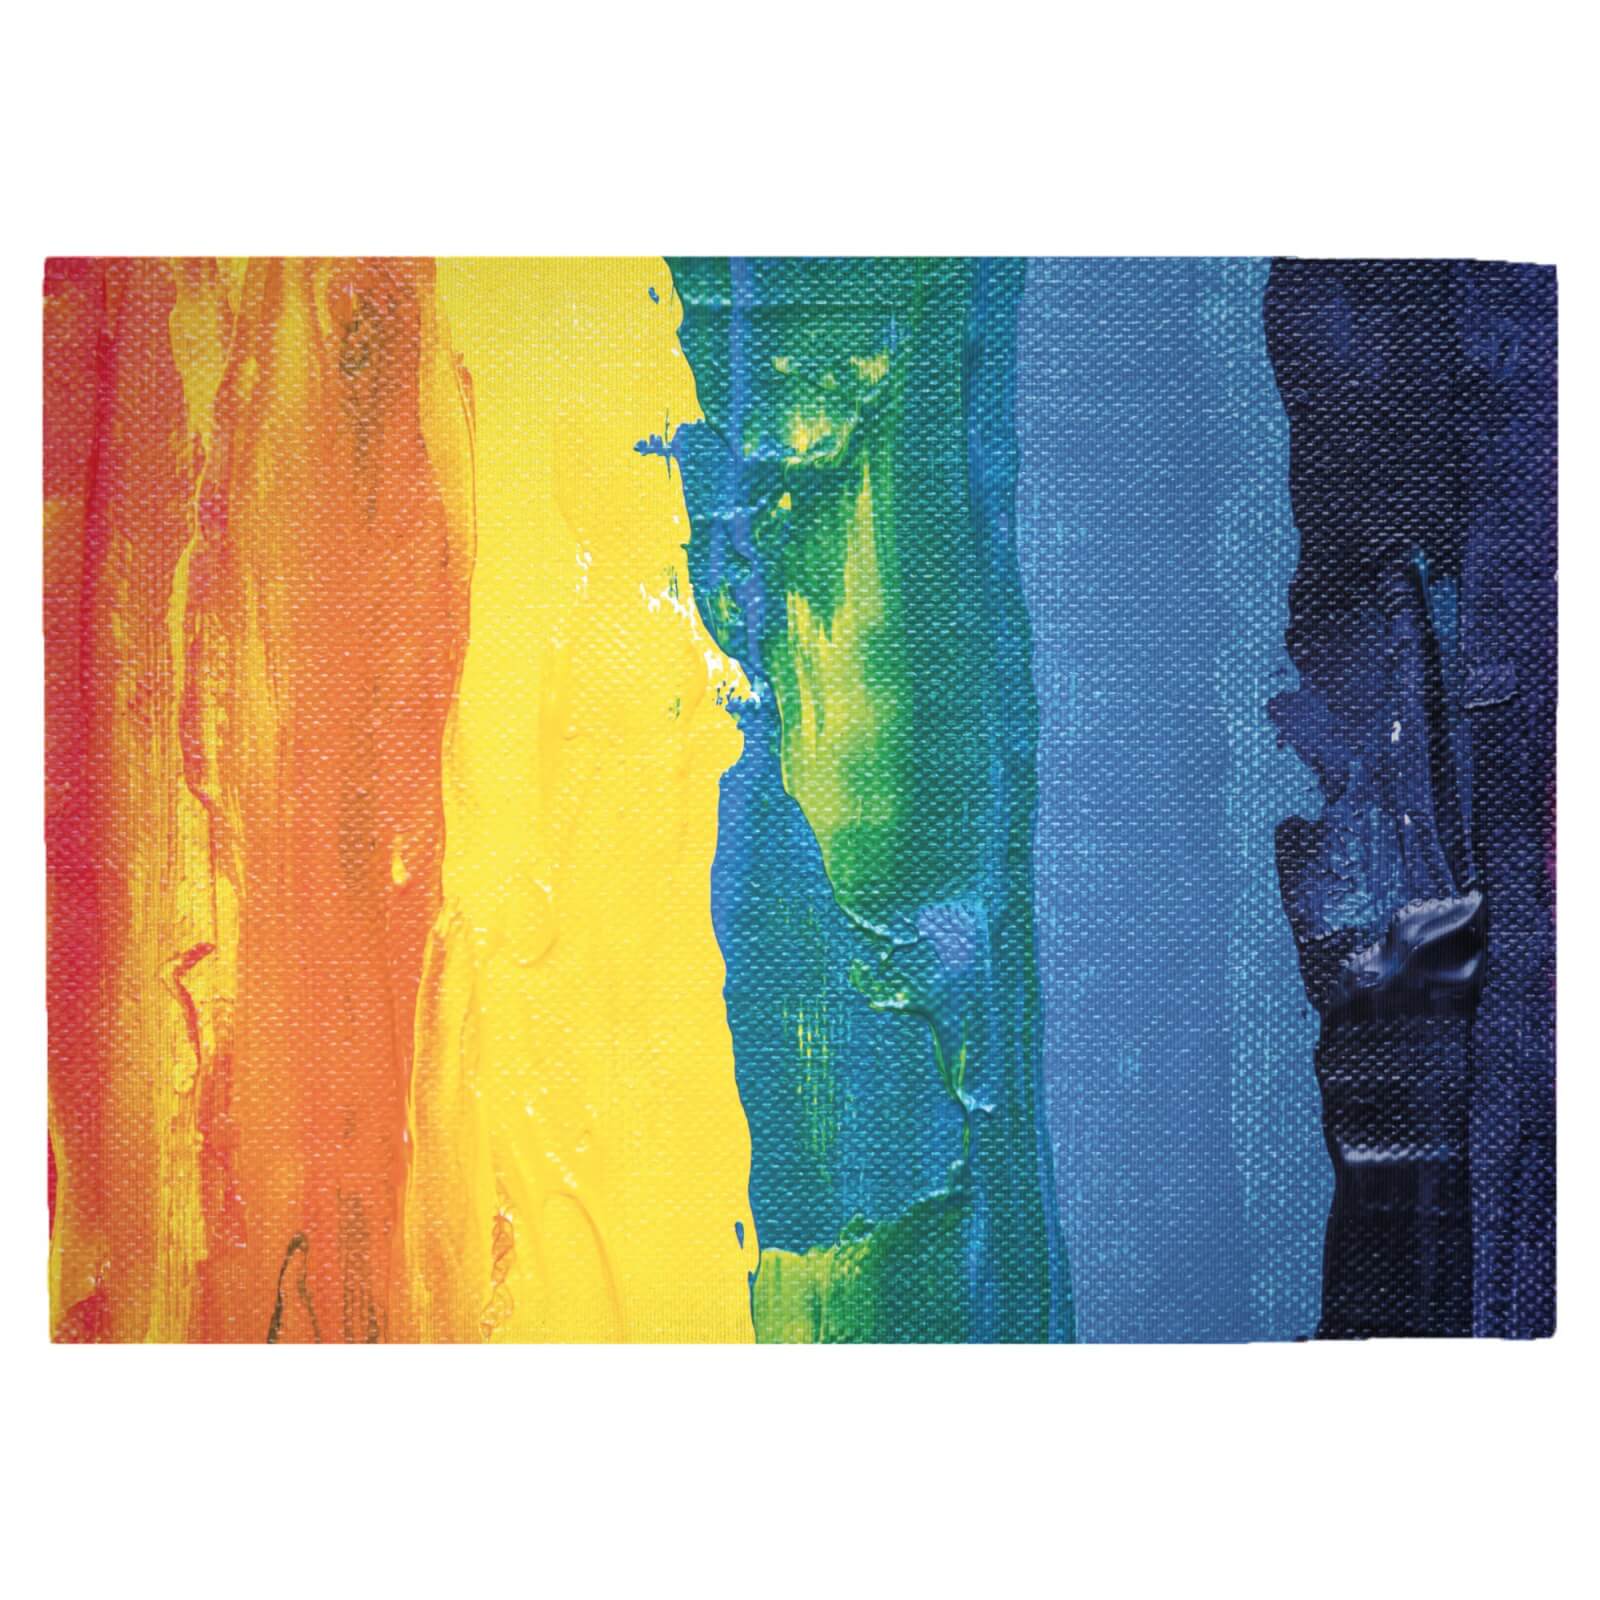 Acrylic Rainbow Woven Rug - Large